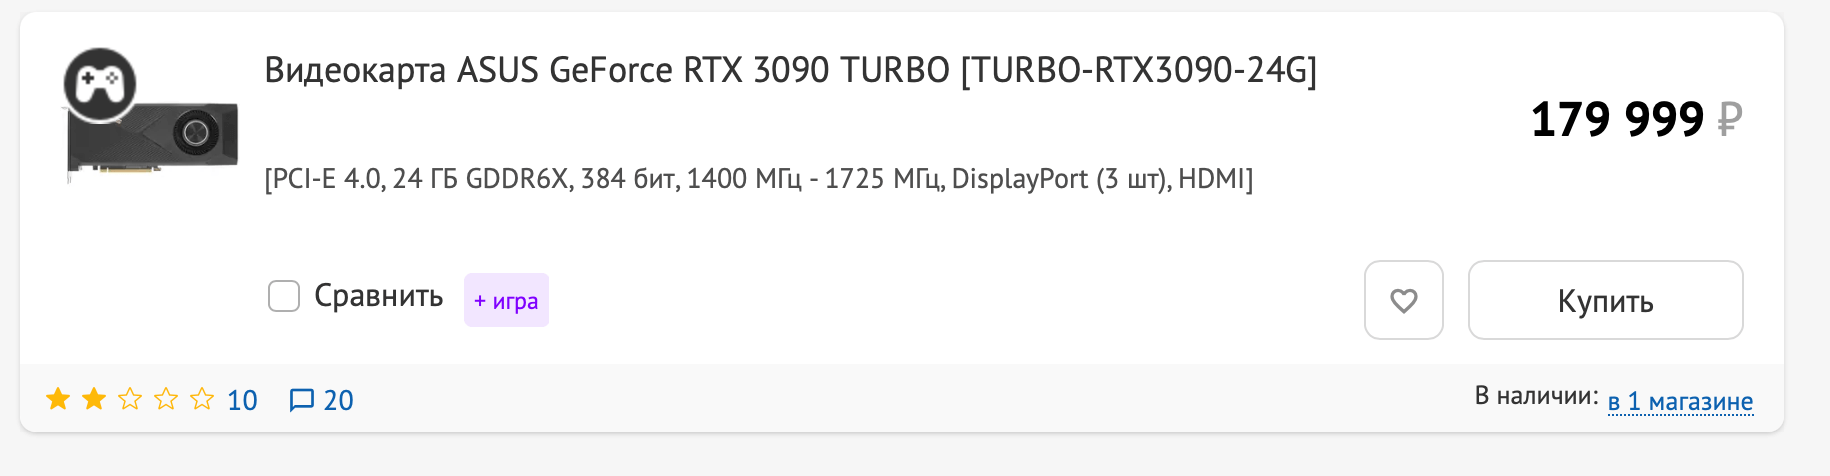 Где купить видеокарты Nvidia RTX 3080. Наличие Nvidia RTX 3090 на DNS. Фото.